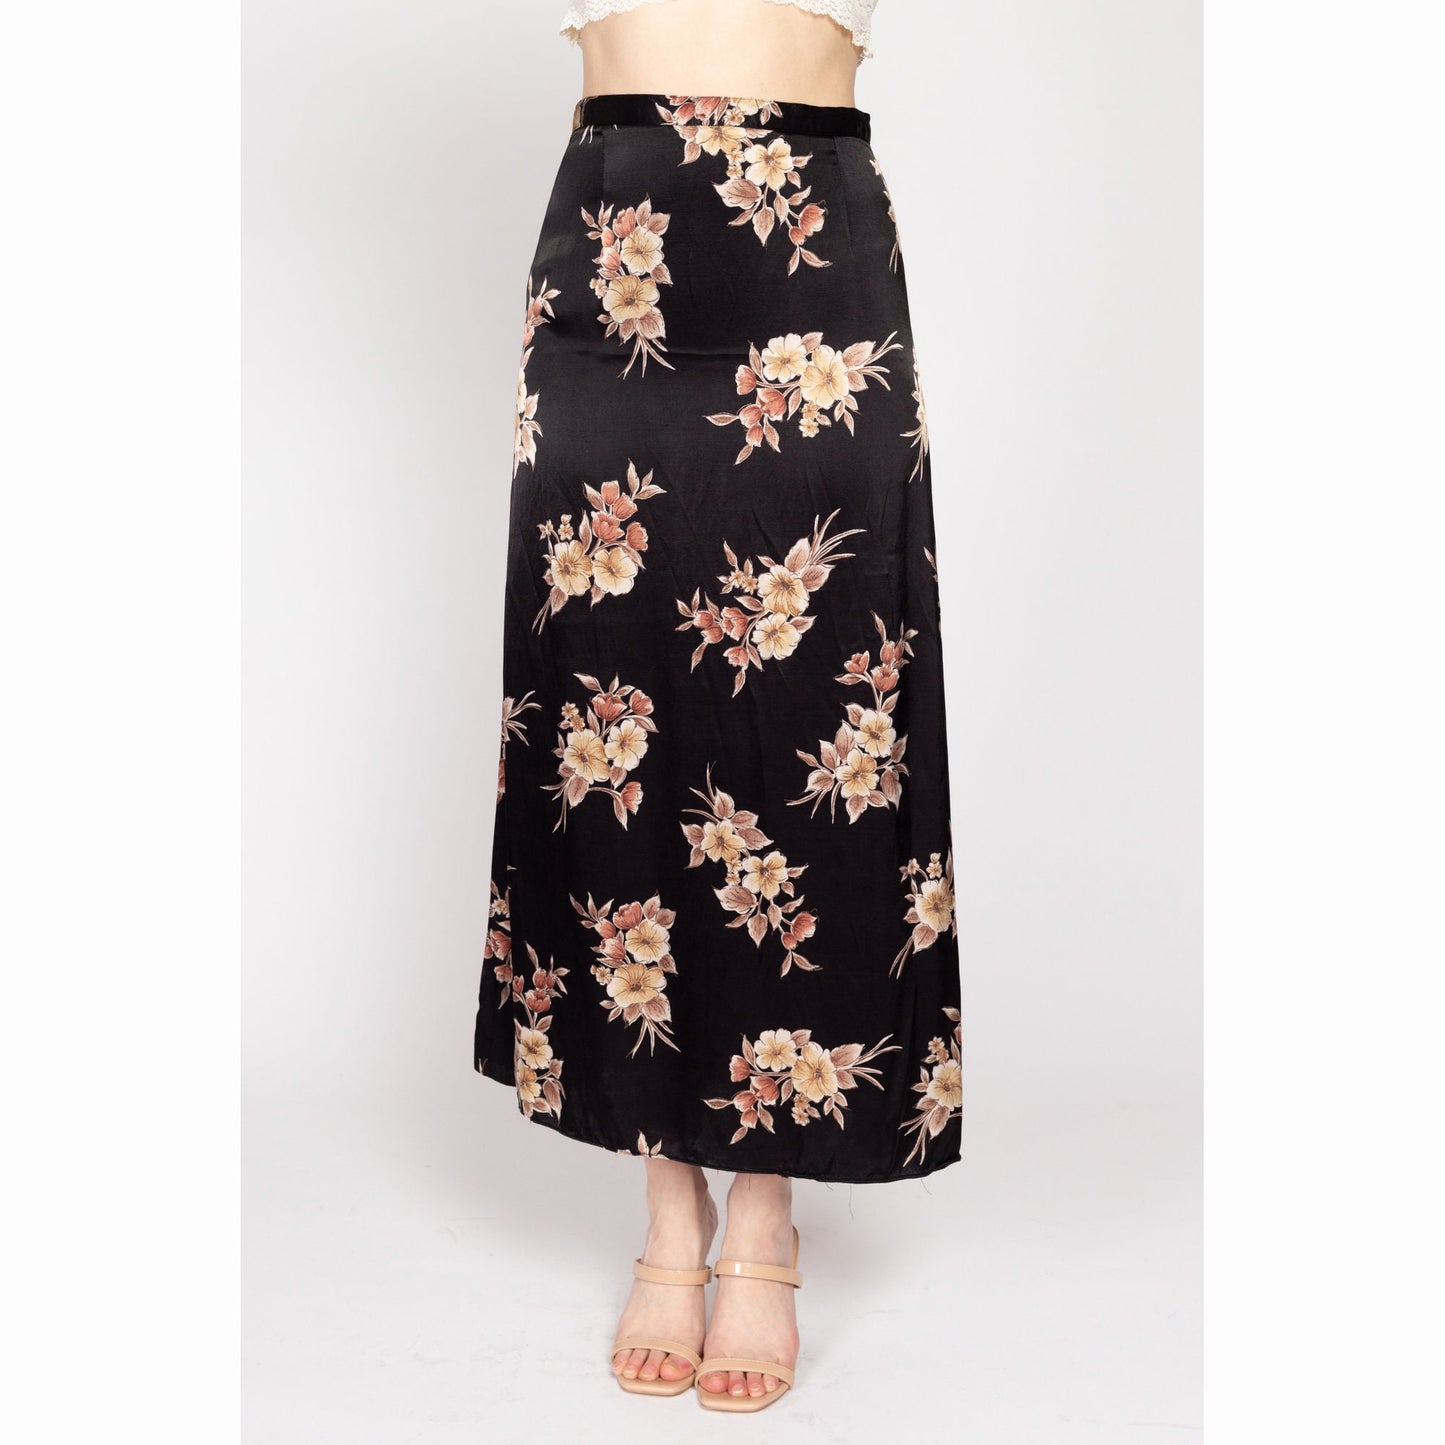 Medium 90s Black Floral Satin Maxi Skirt 28" | Vintage High Waisted Boho A Line Flowy Slip Skirt